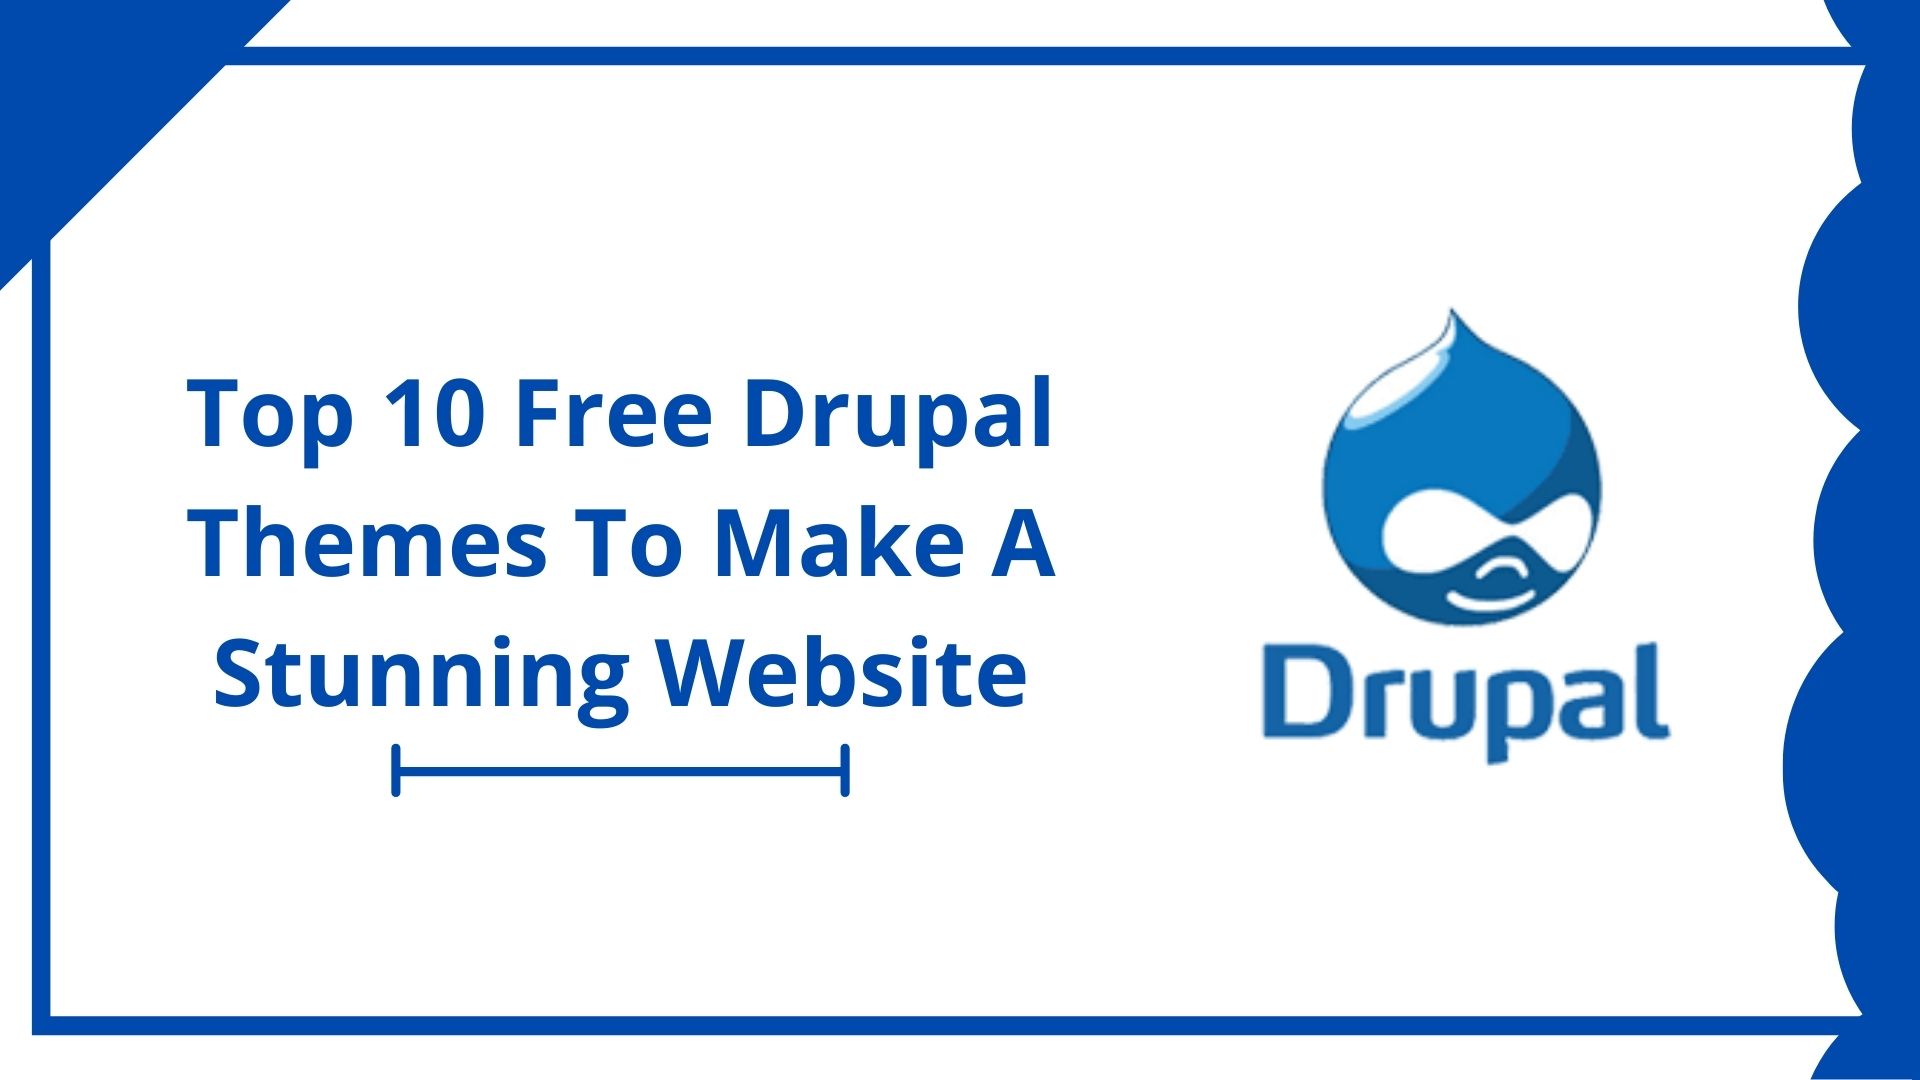 public/uploads/2020/09/Top-10-Free-Drupal-Themes-To-Make-A-Stunning-Website.jpg